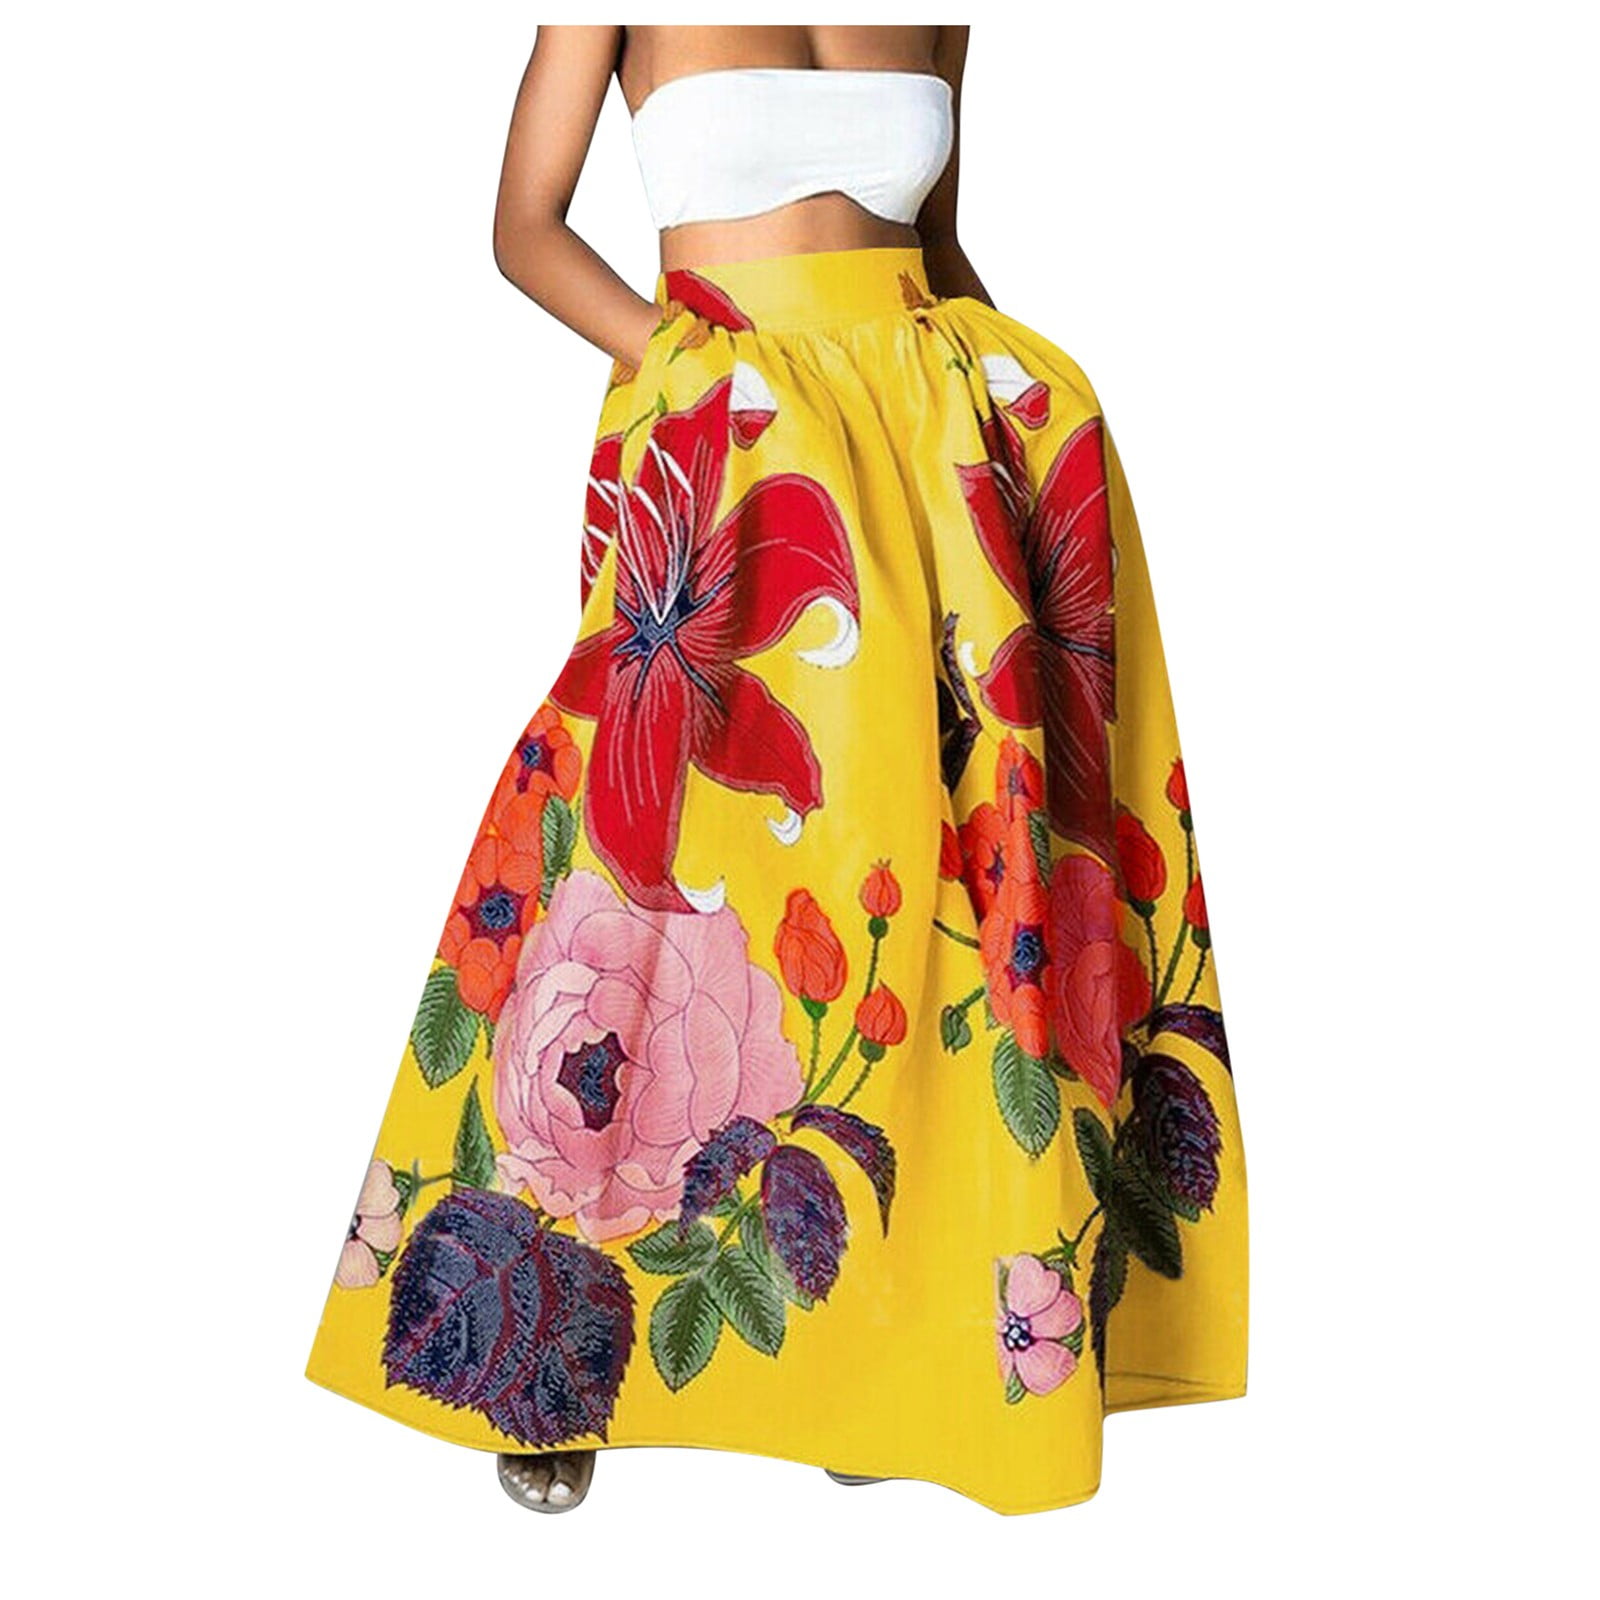 Shiusina Women Bohemian Floral Print Skirt High Waist Party Beach ...